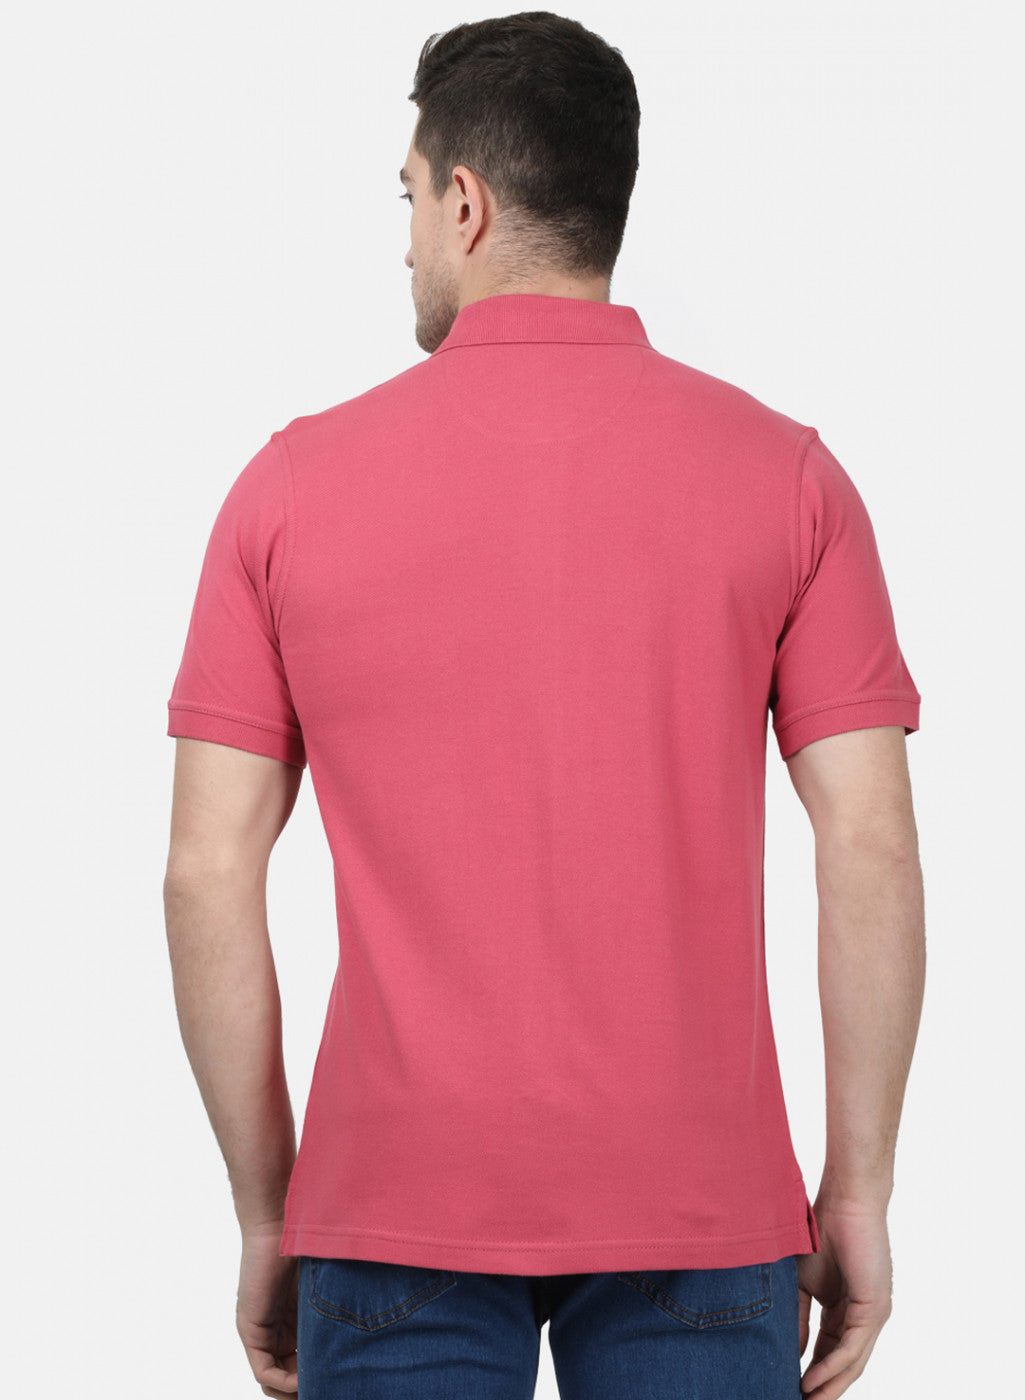 Mens Pink Plain T-Shirts